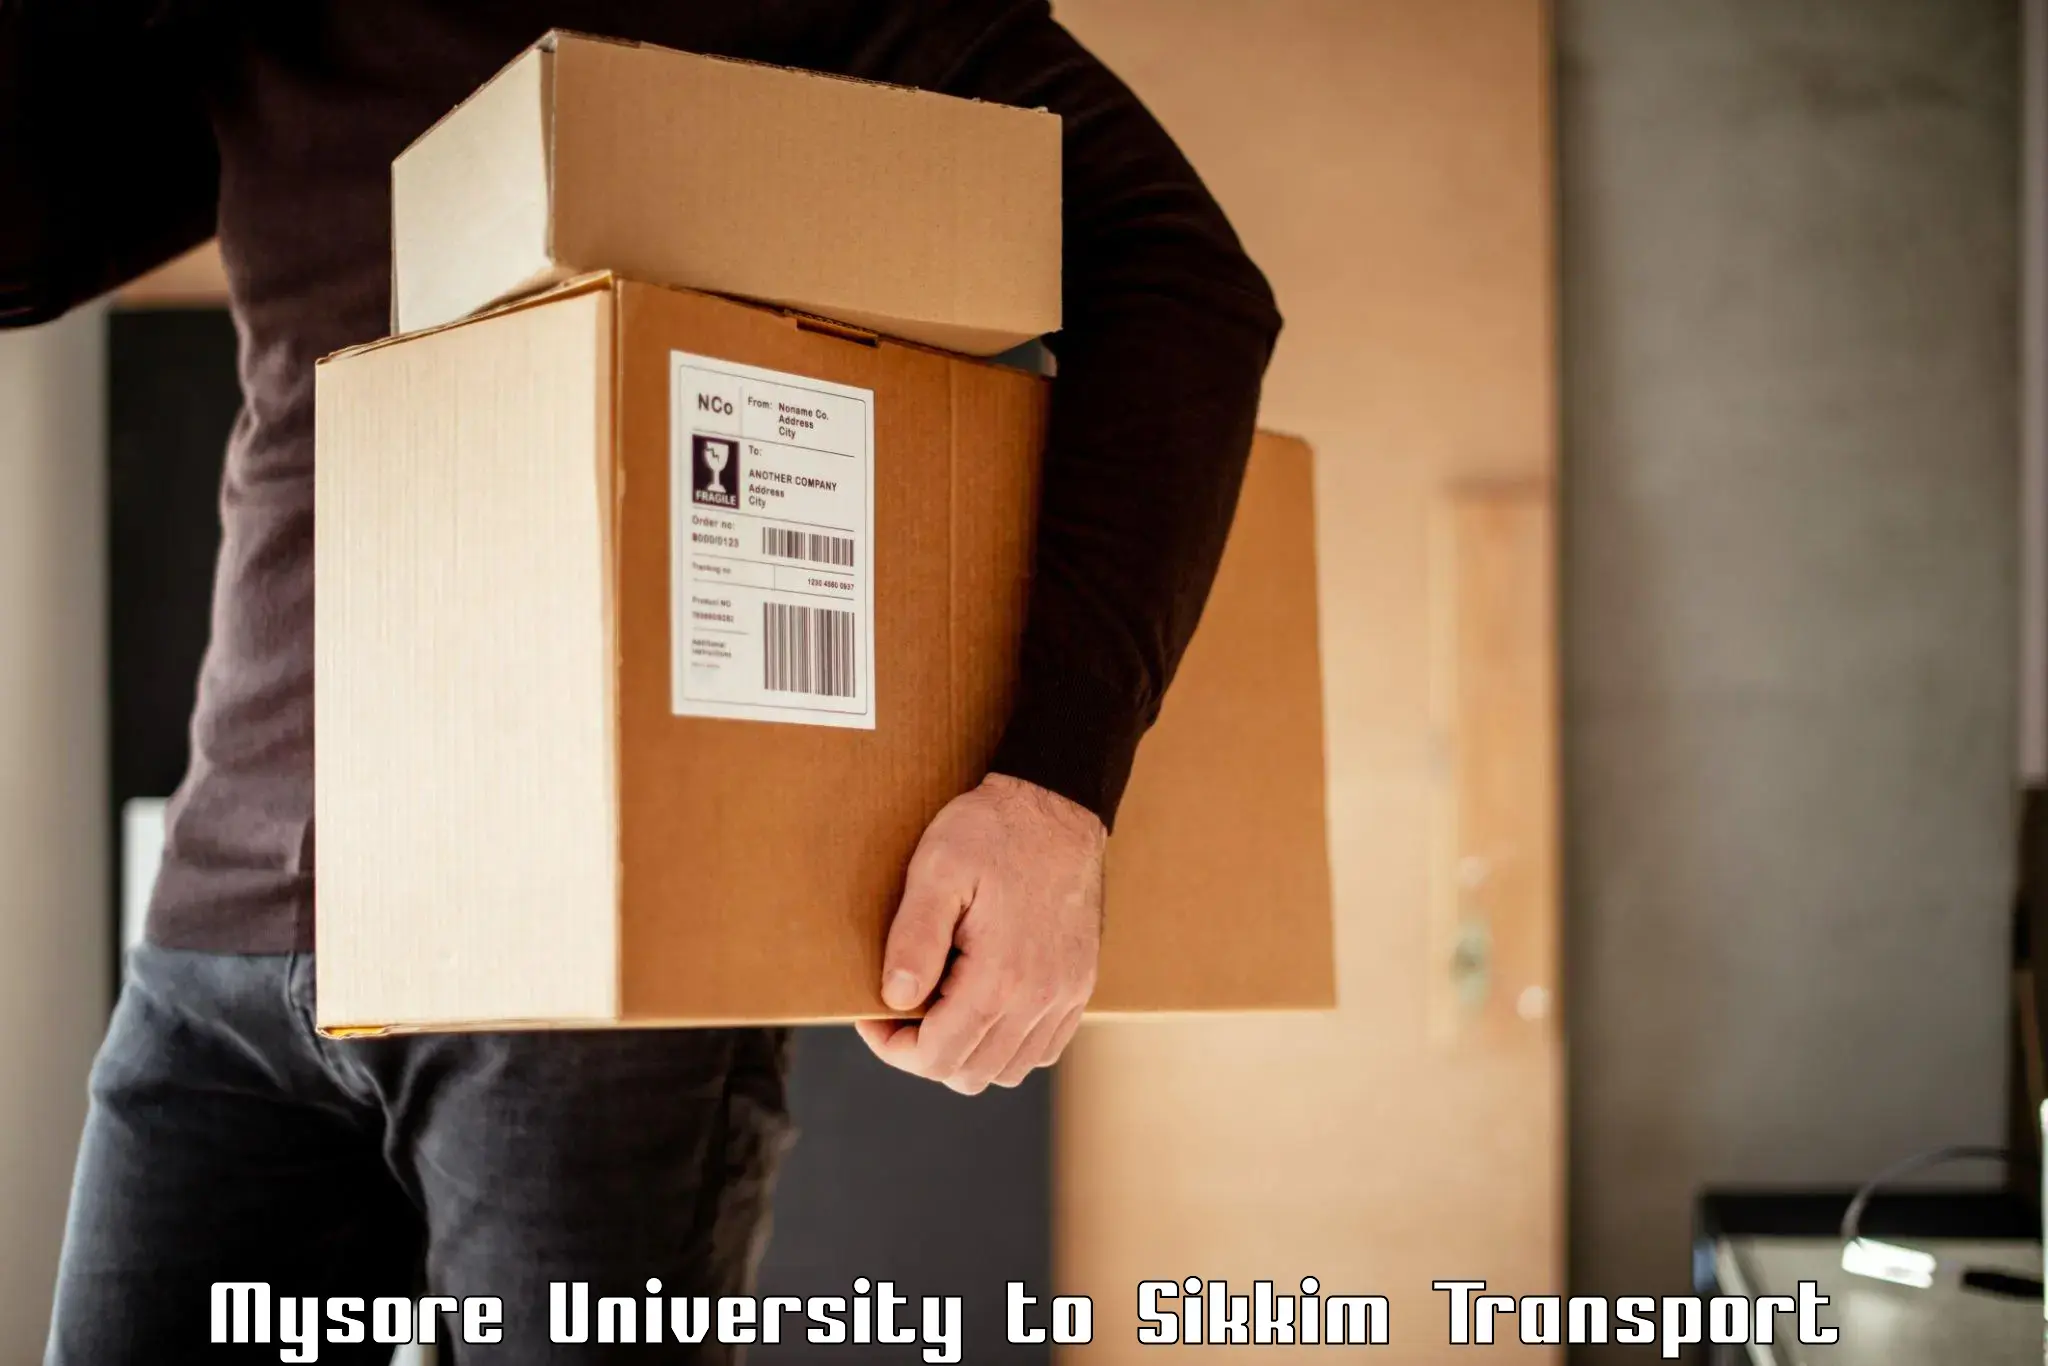 Delivery service Mysore University to North Sikkim